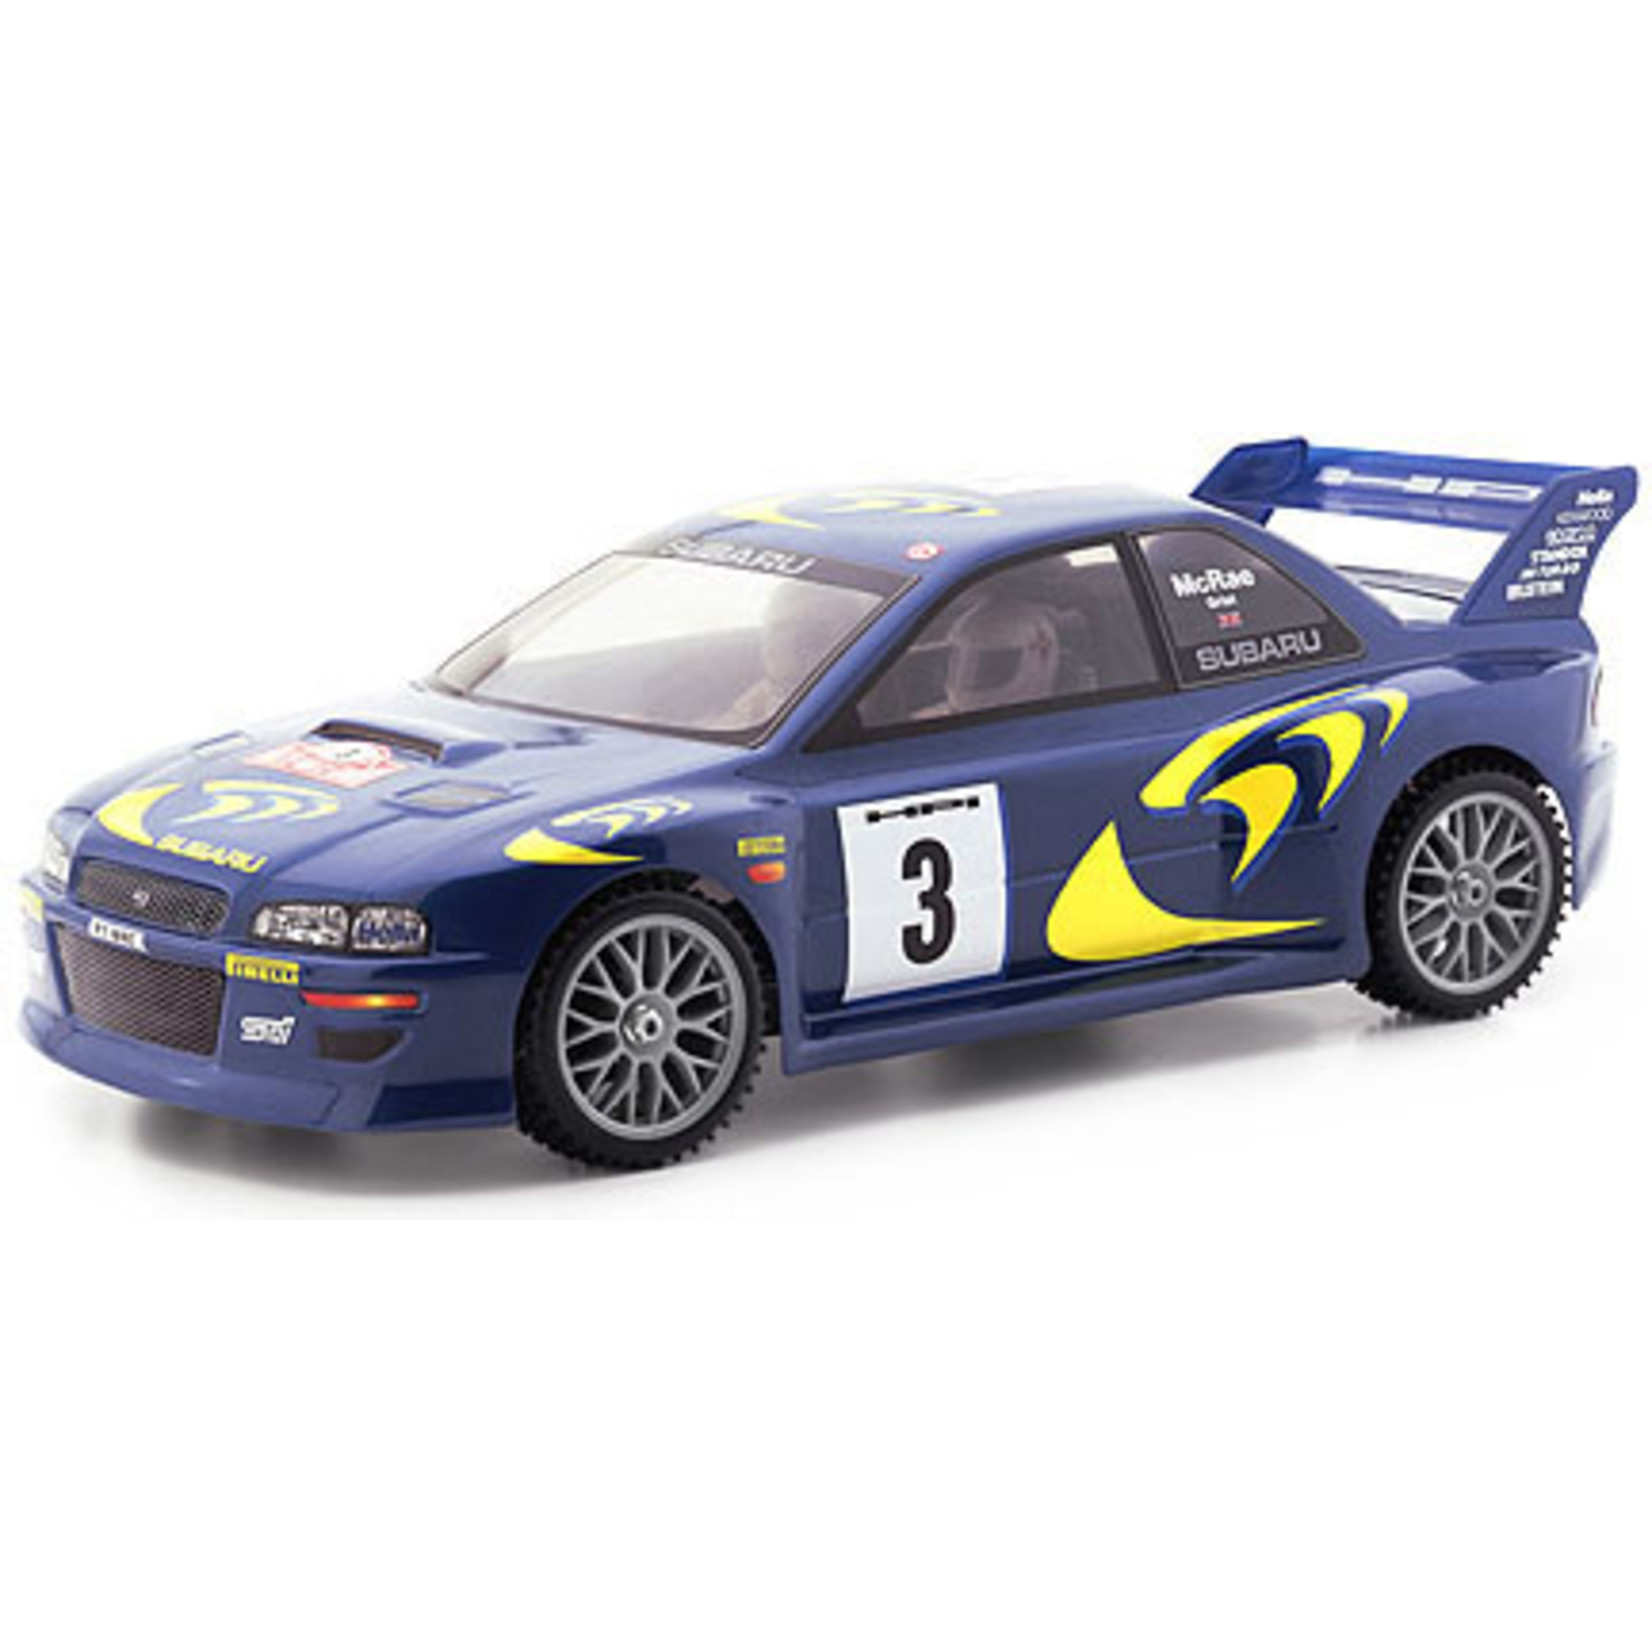 HPI Racing Subaru Impreza WRC '98 Body (200mm)